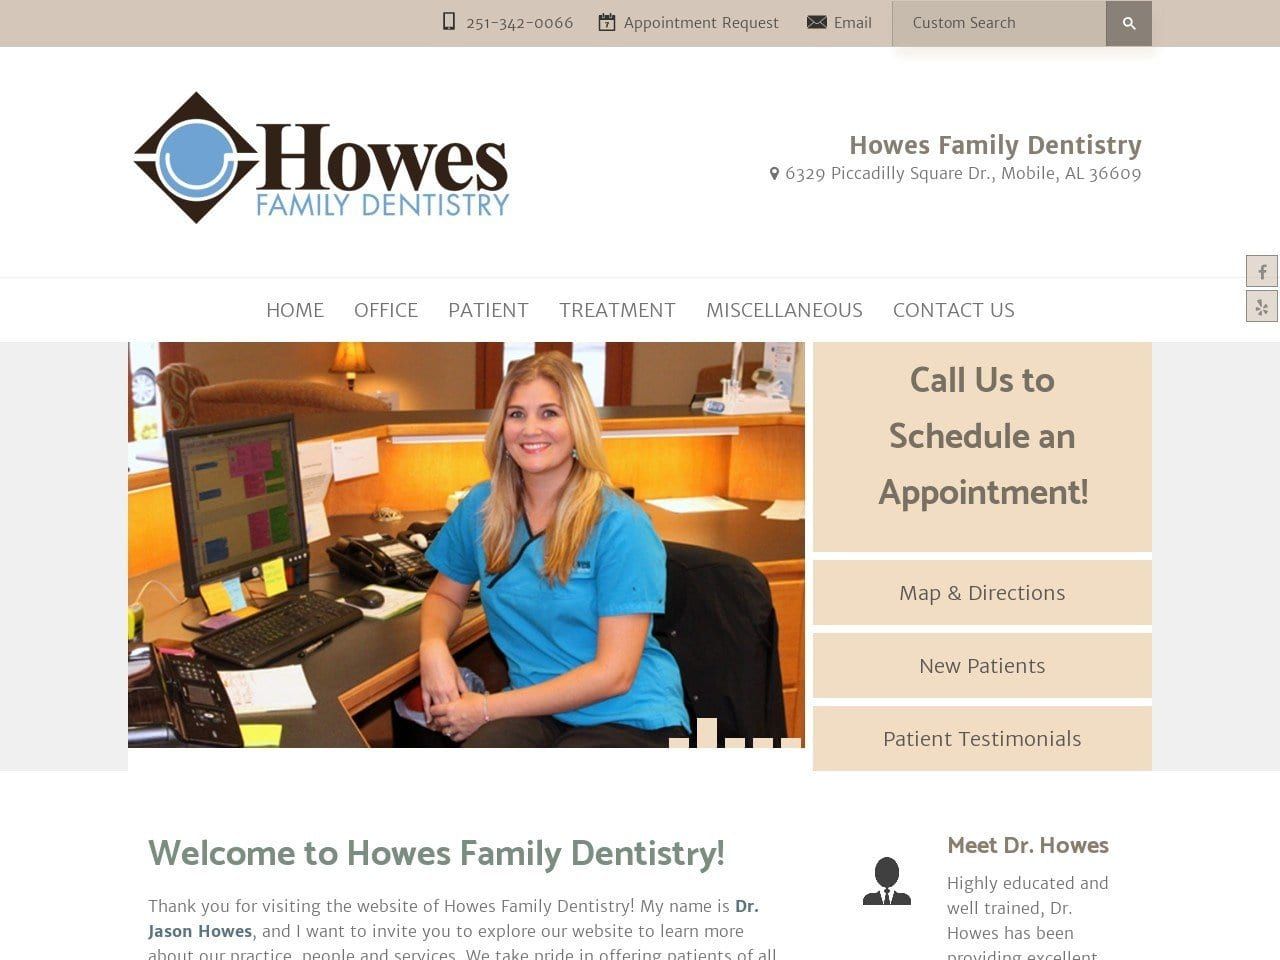 Howes Family Dentistry Website Screenshot from howesfamilydentistry.com